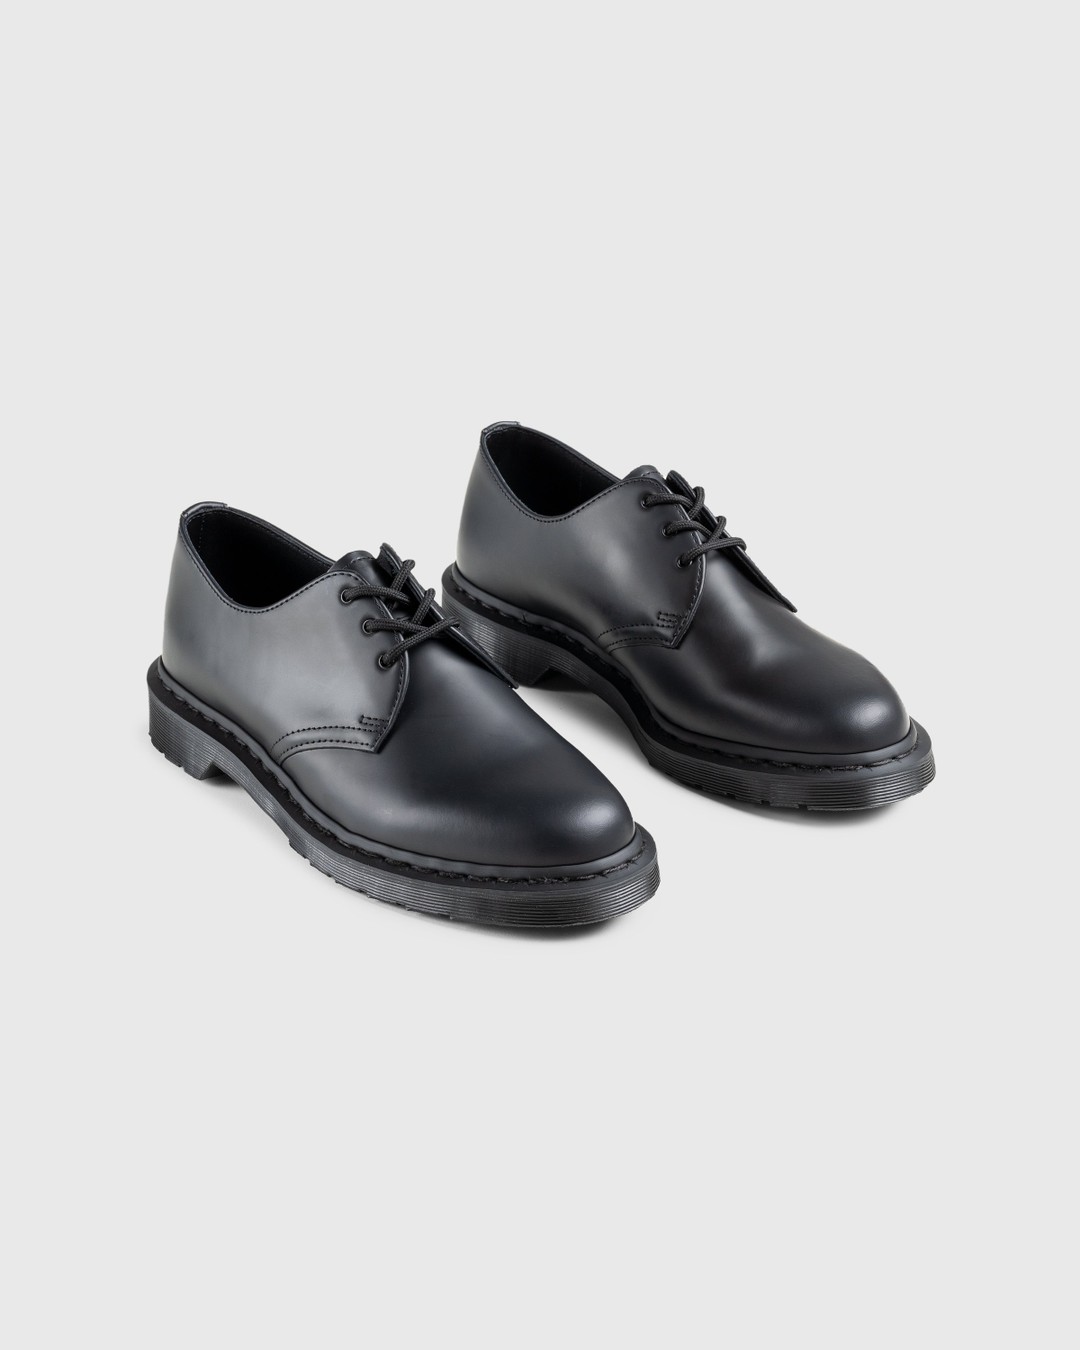 Dr. Martens – 1461 Mono Black Smooth - Shoes - Black - Image 3